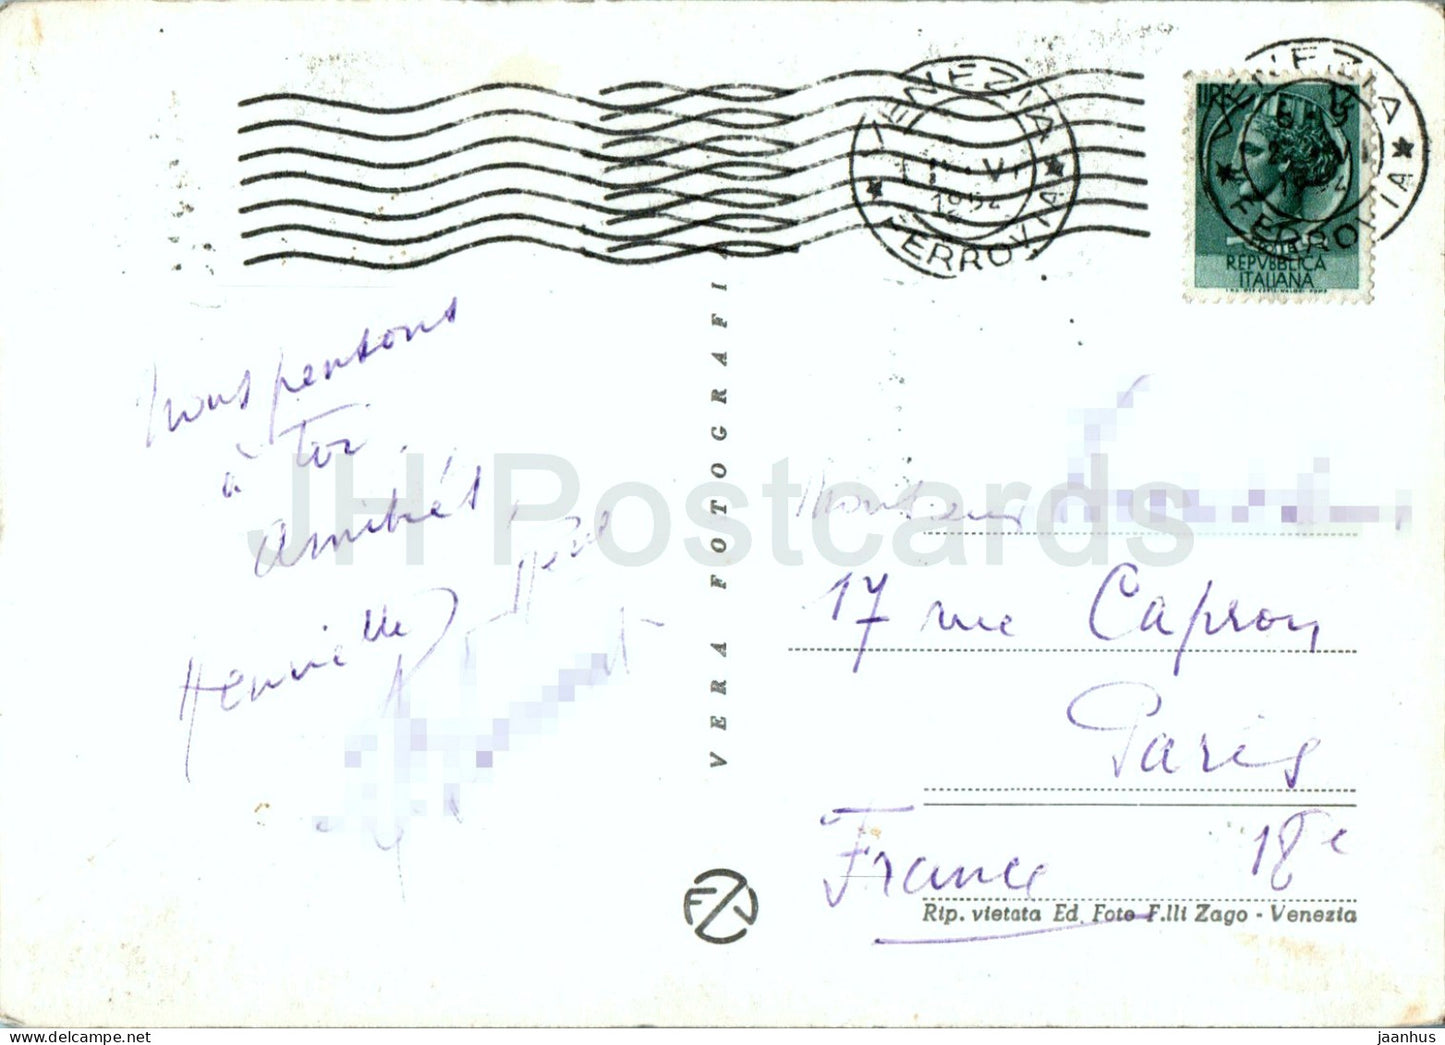 Venezia - Venedig - Scorcio - Gondel - Boot - 1009 - alte Postkarte - 1954 - Italien - gebraucht 